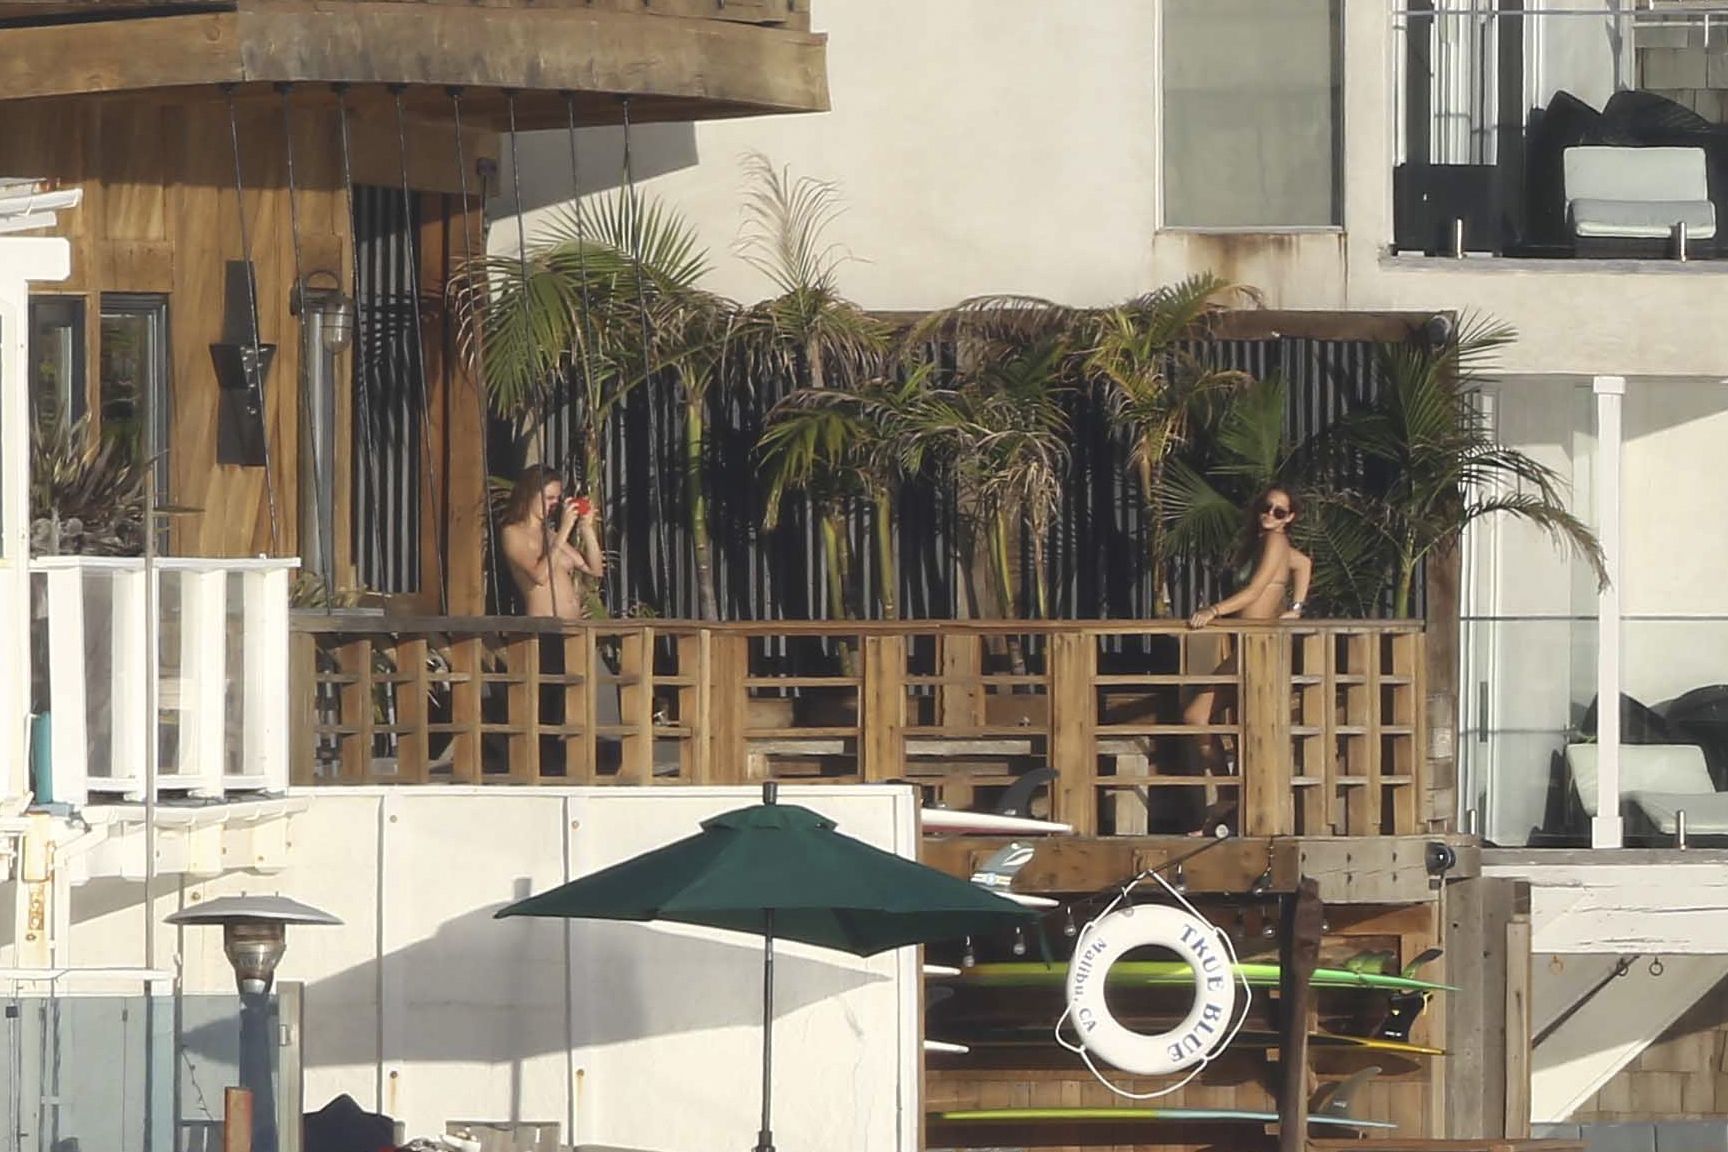 Cara_Delevingne_topless_on_a_balcony_in_Malibu_48x_HQ_27.jpg